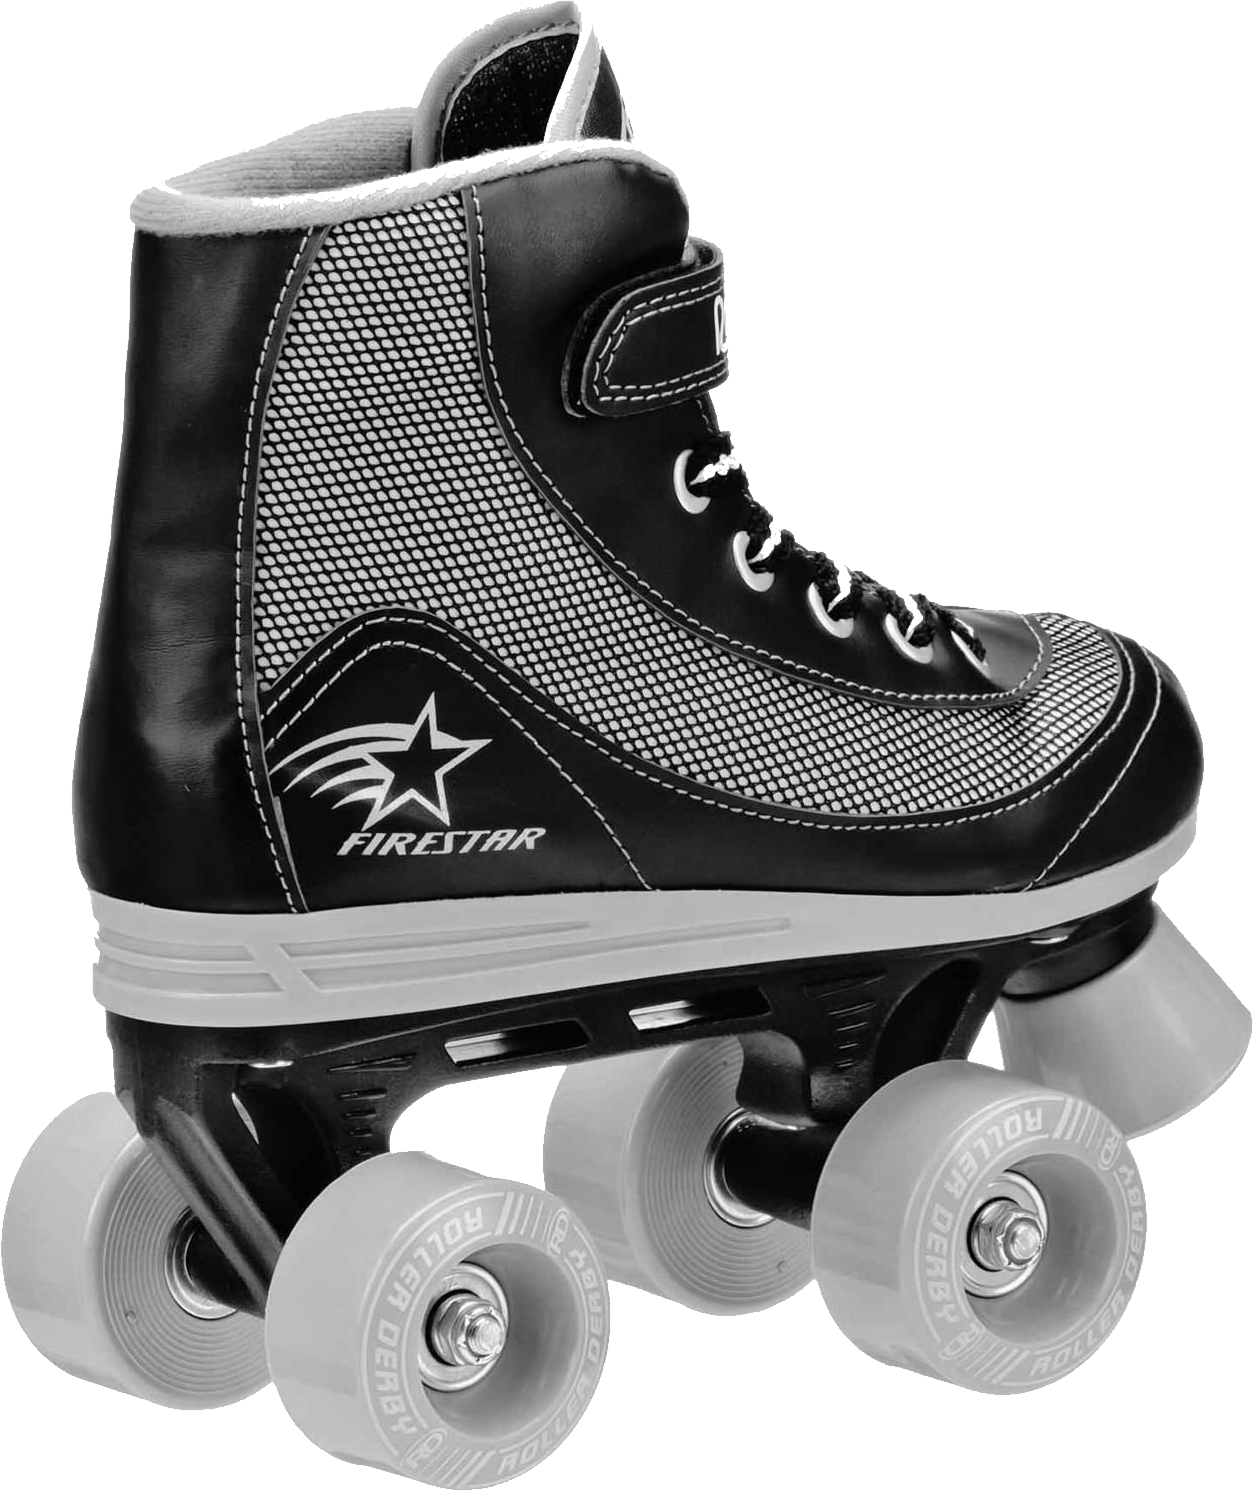 A Black And Grey Roller Skate